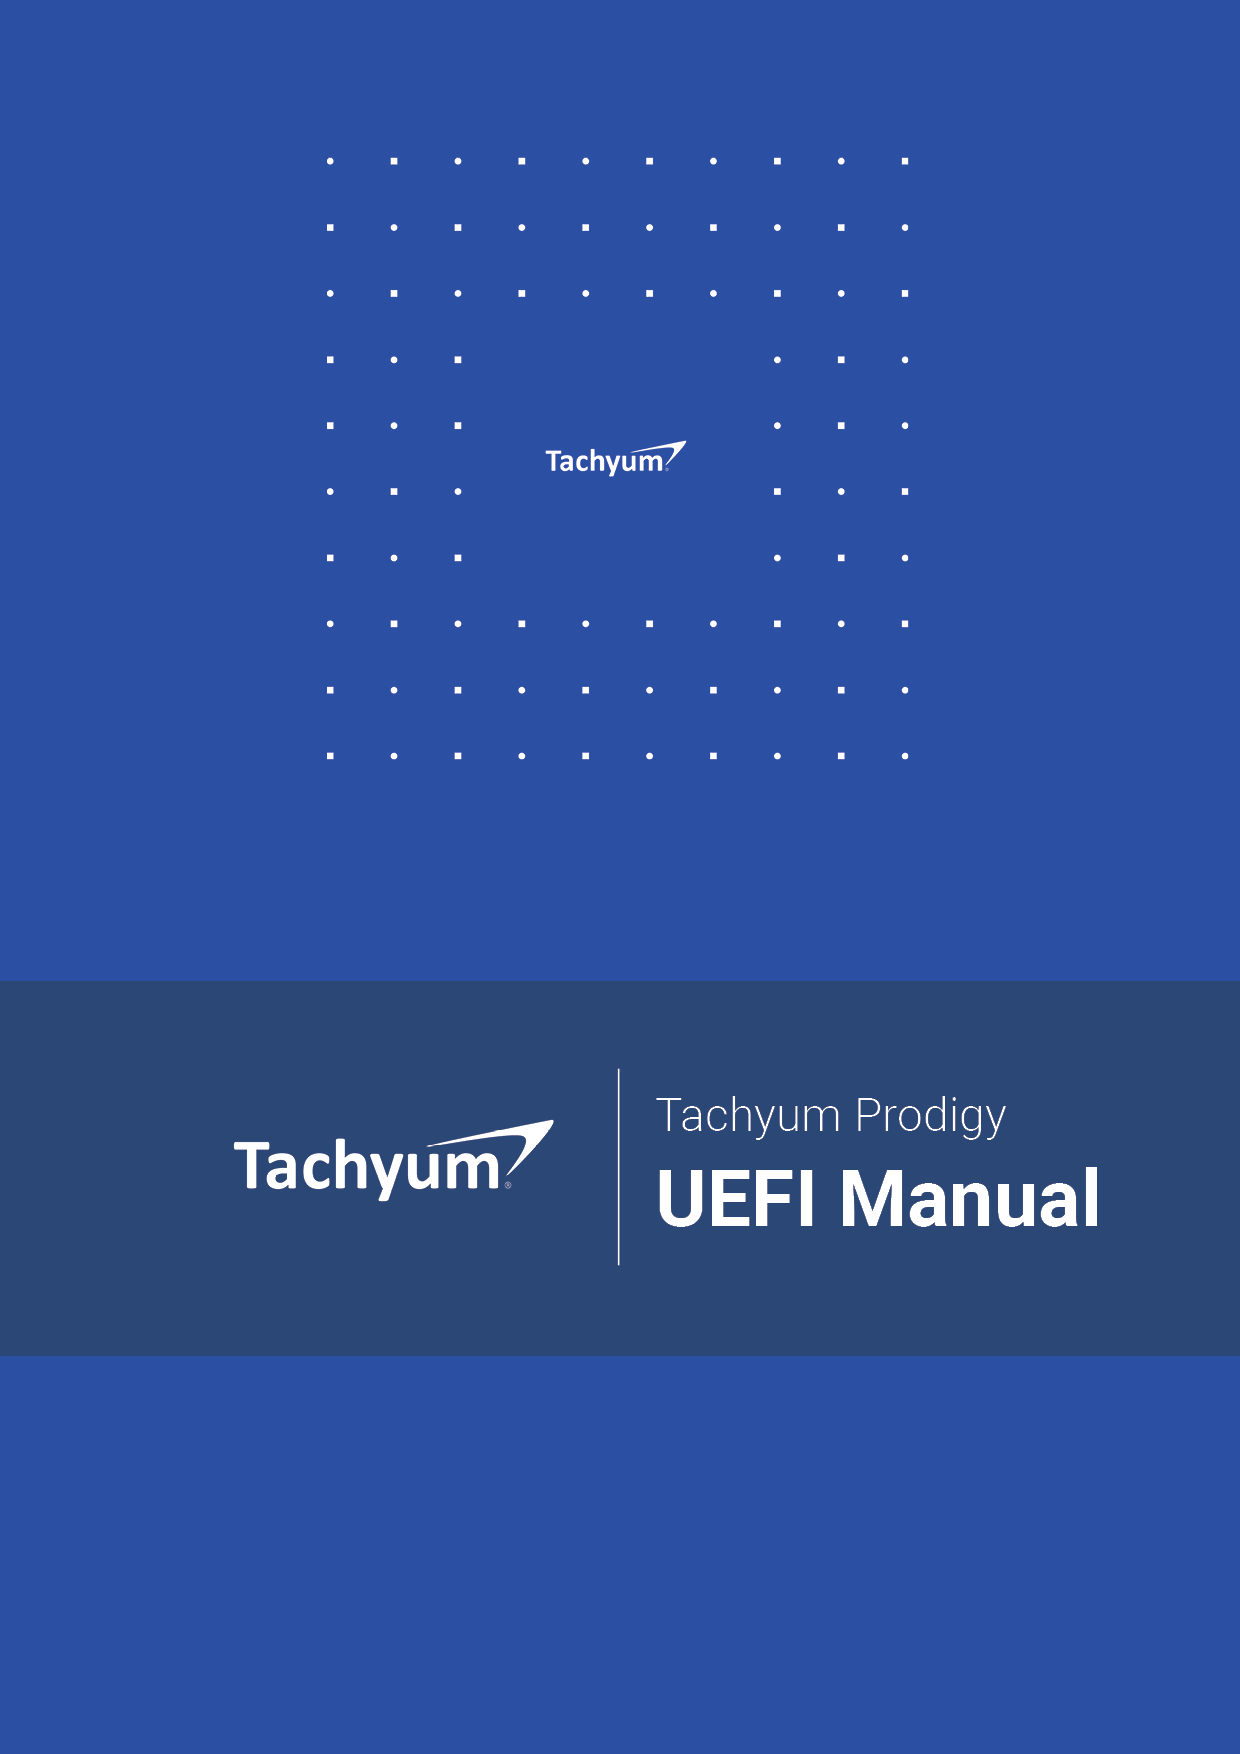 UEFI Manual